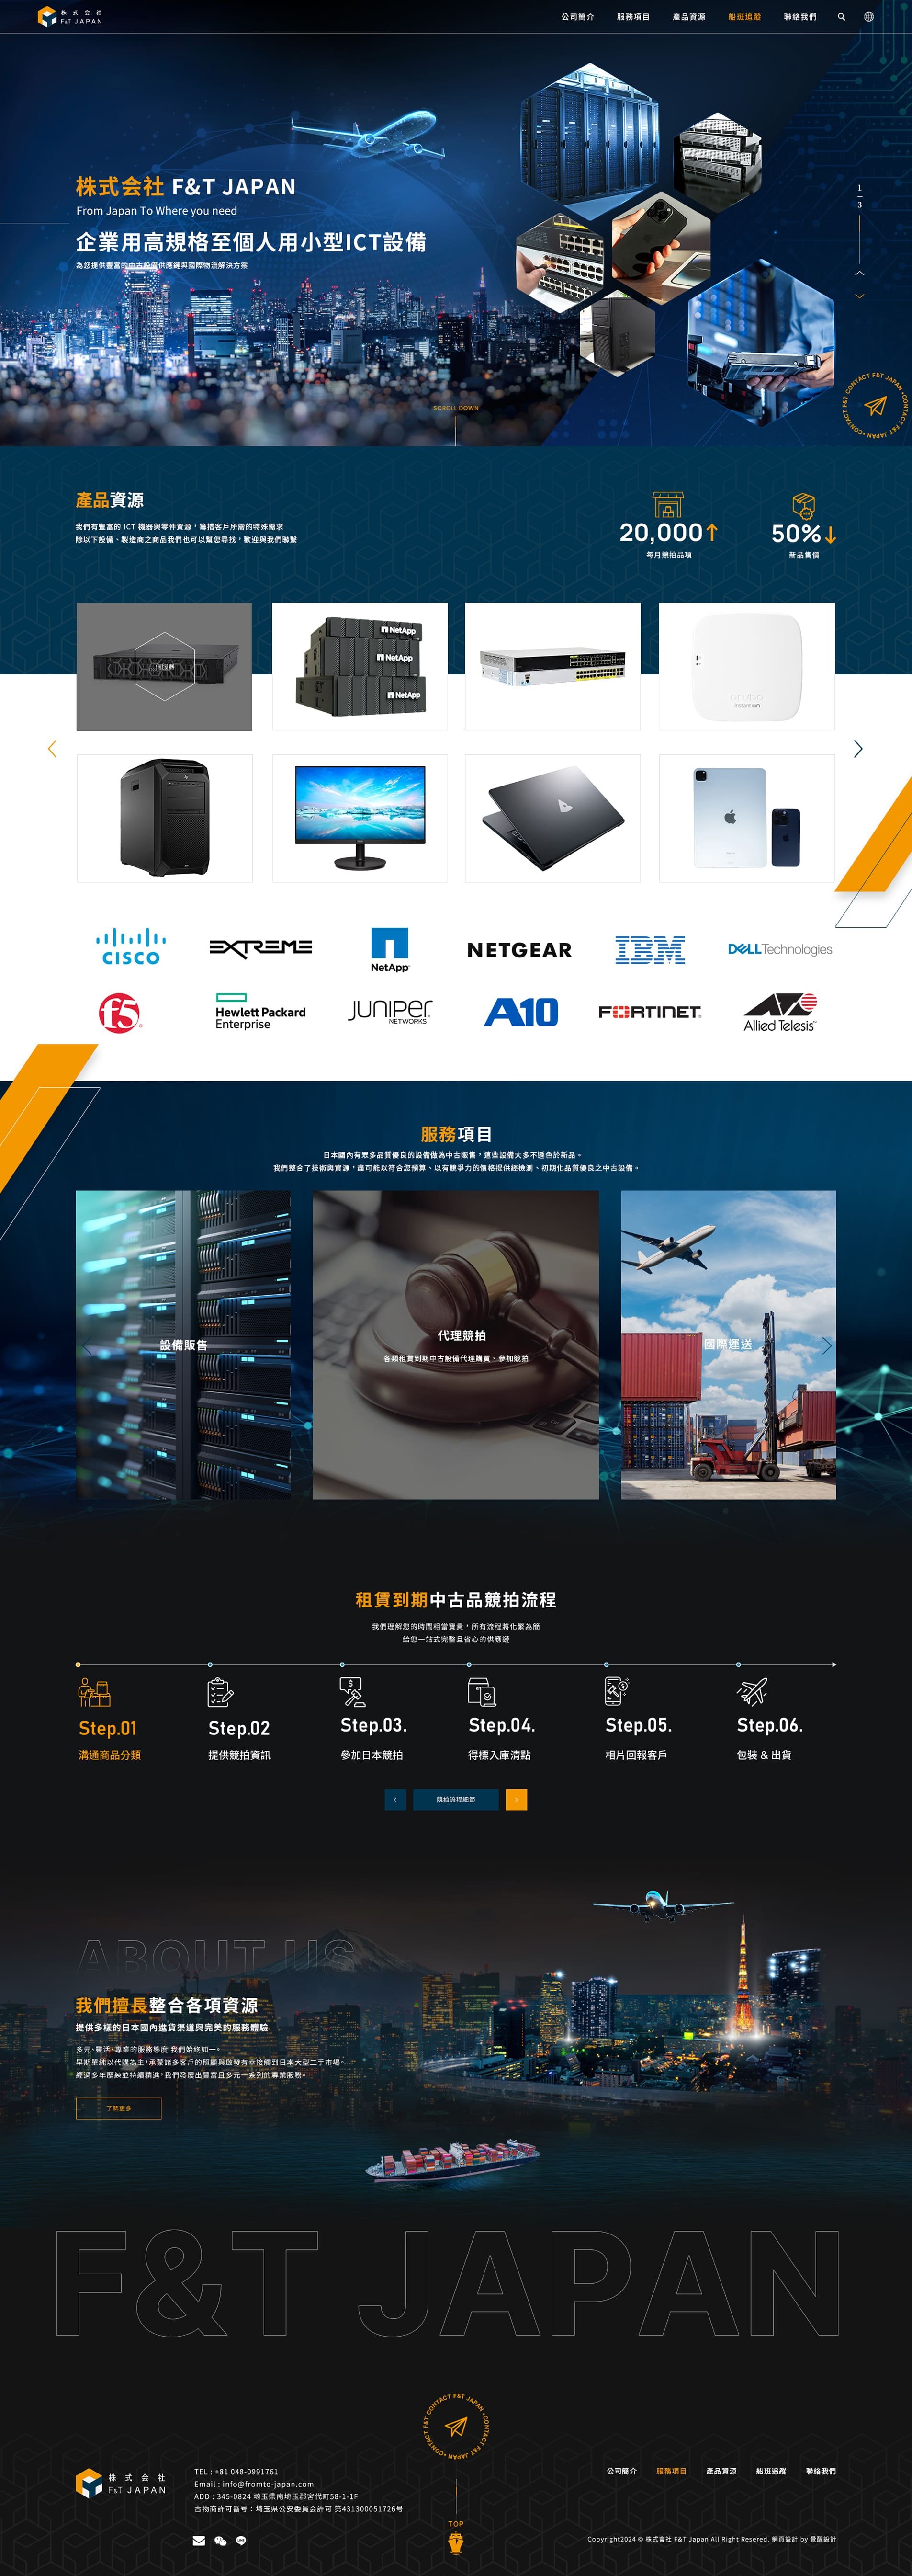 F&T Japan 二手中古網路設備供應商｜SEO、RWD 網頁/網站設計範例